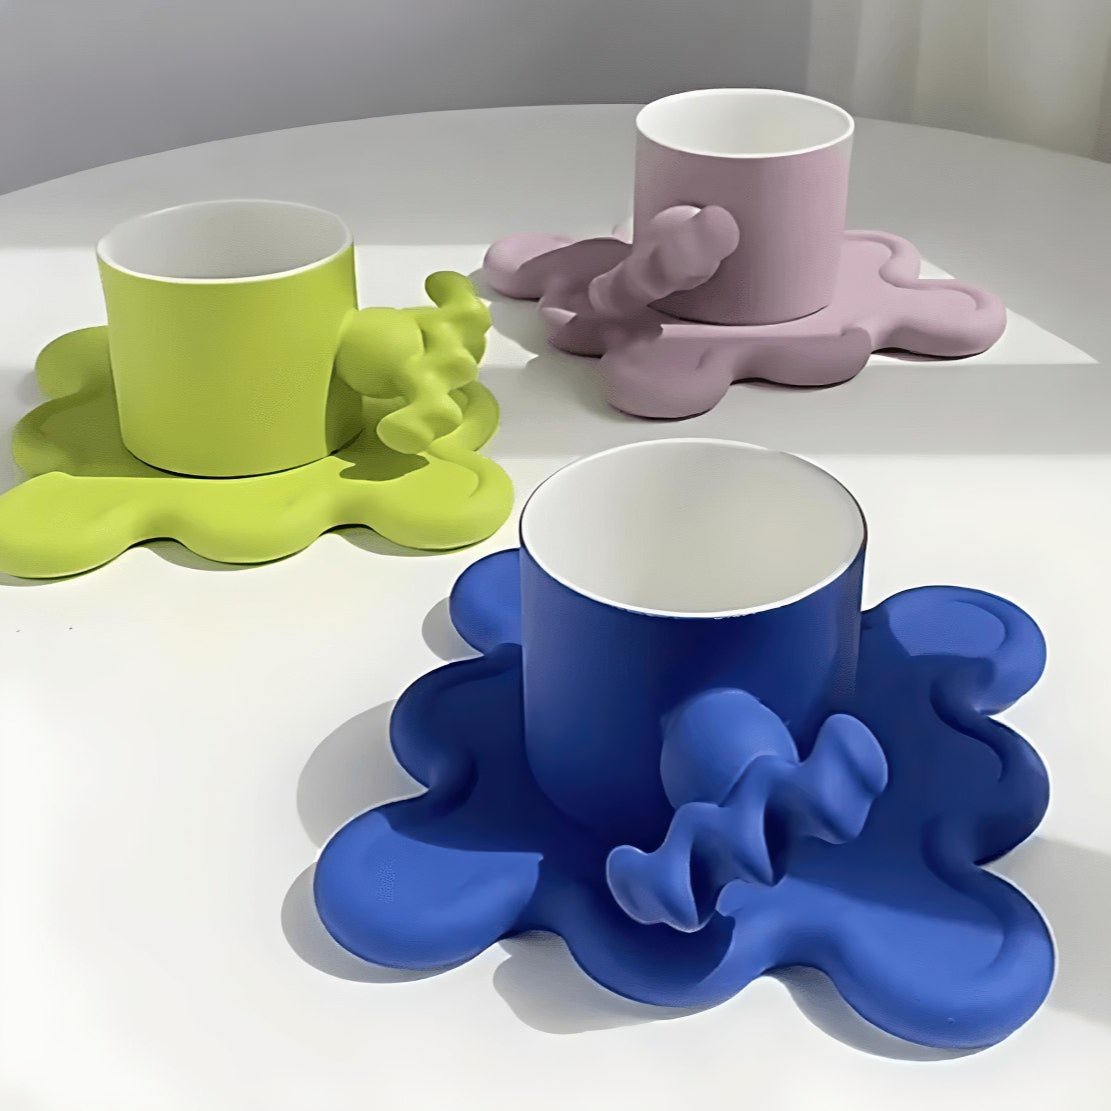 Blue, green & pink geometrical playful shape ceramic coffee mug with saucer